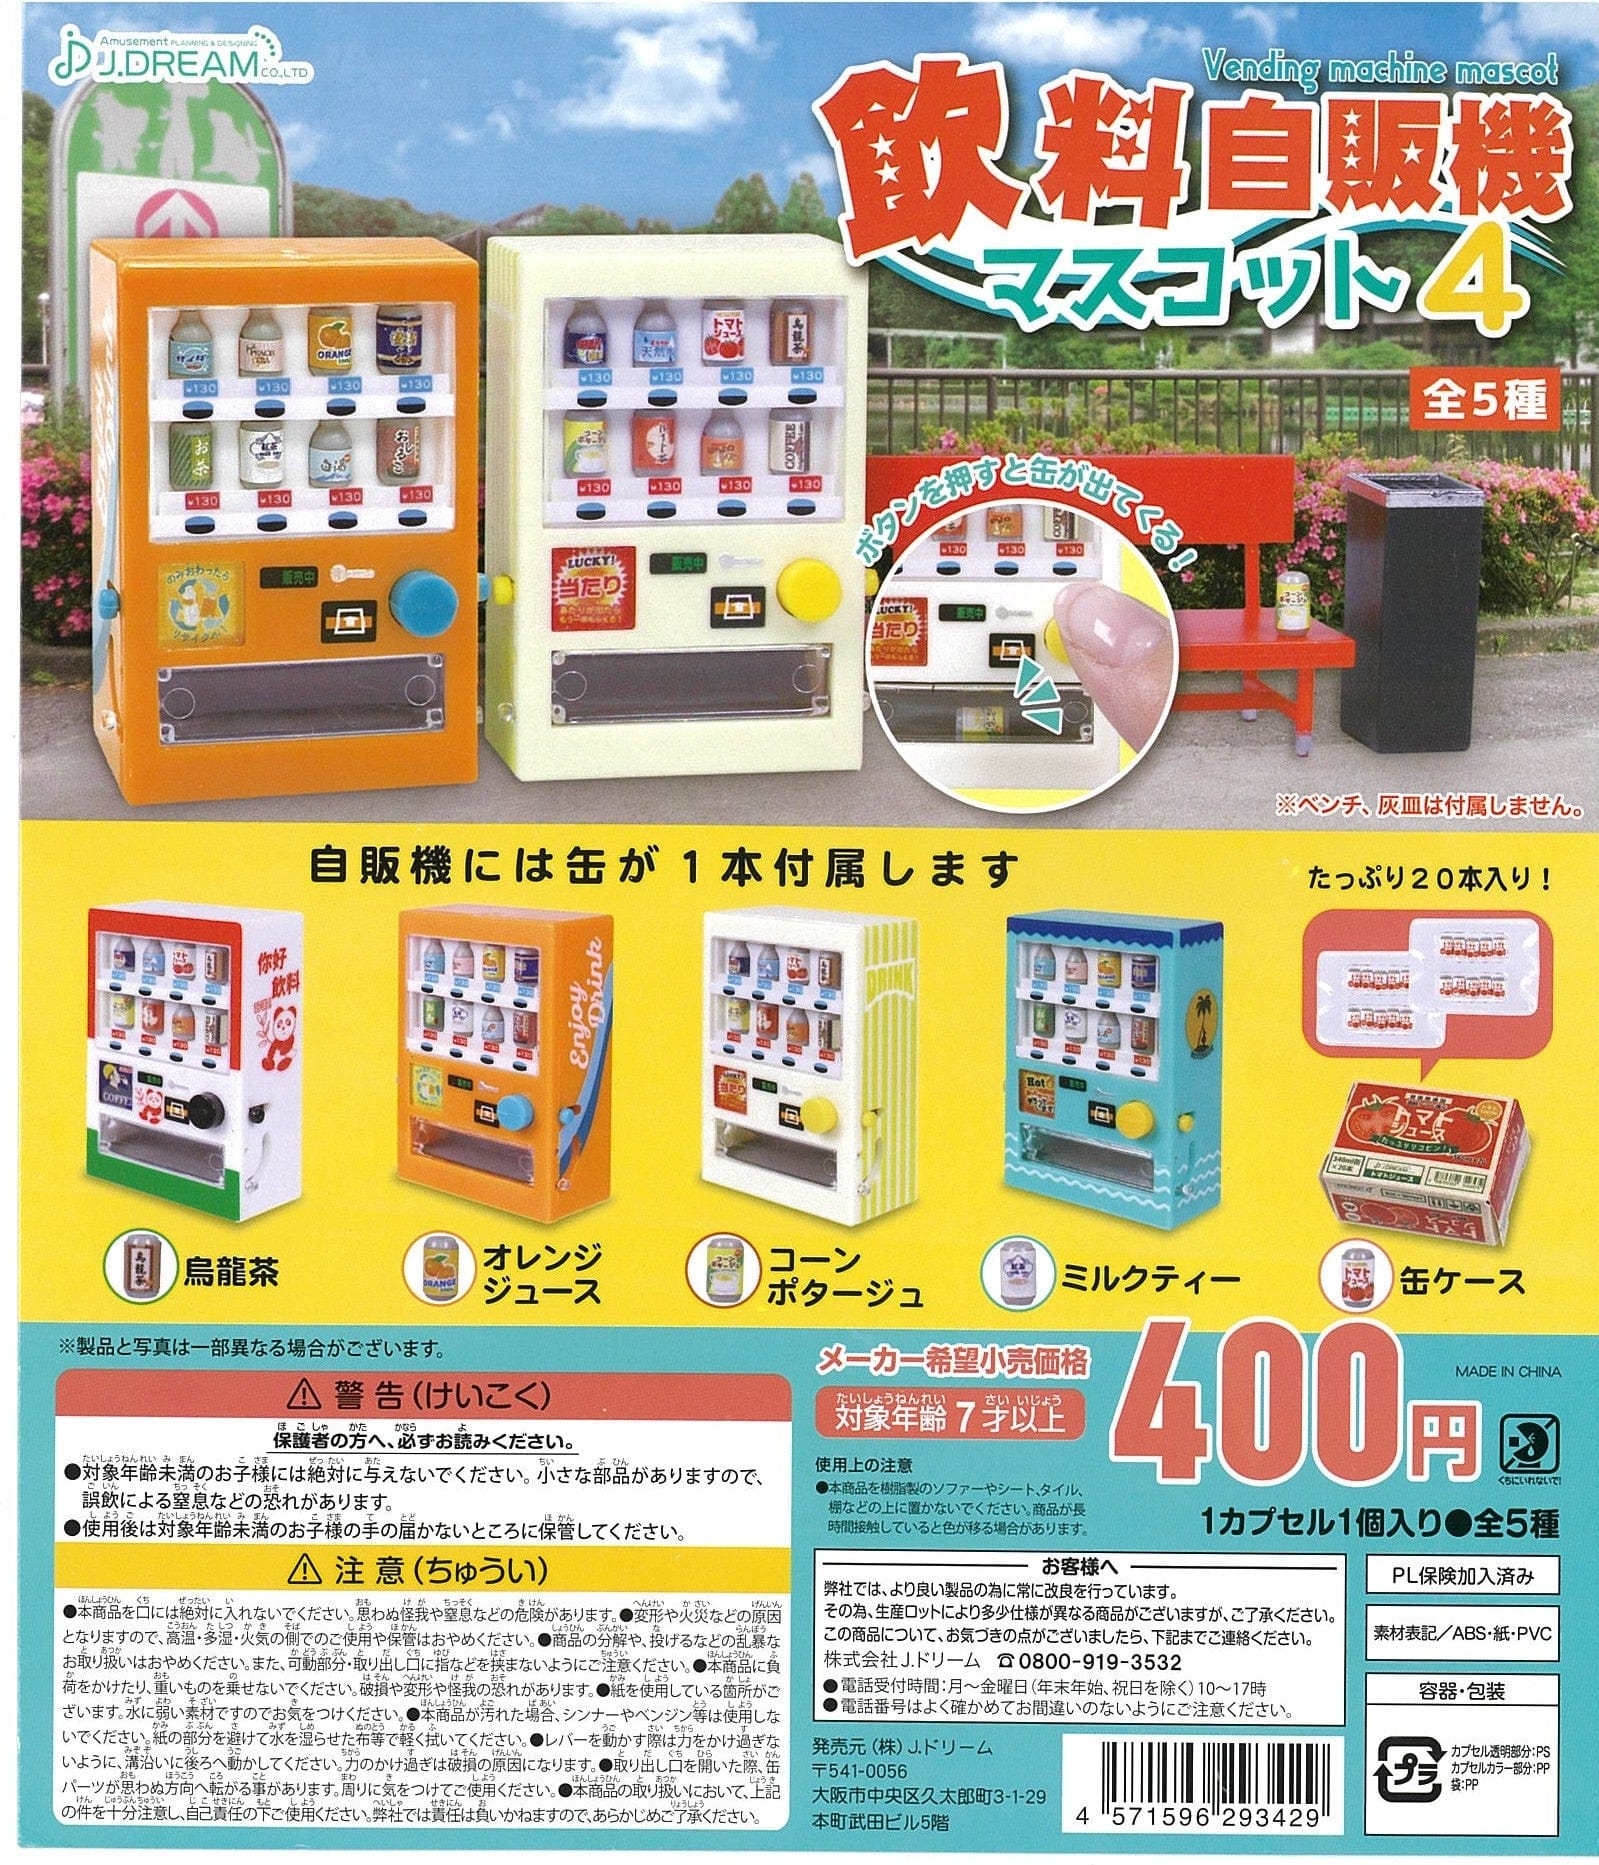 JDream CP2275 Beverage Vending Machine Mascot 4